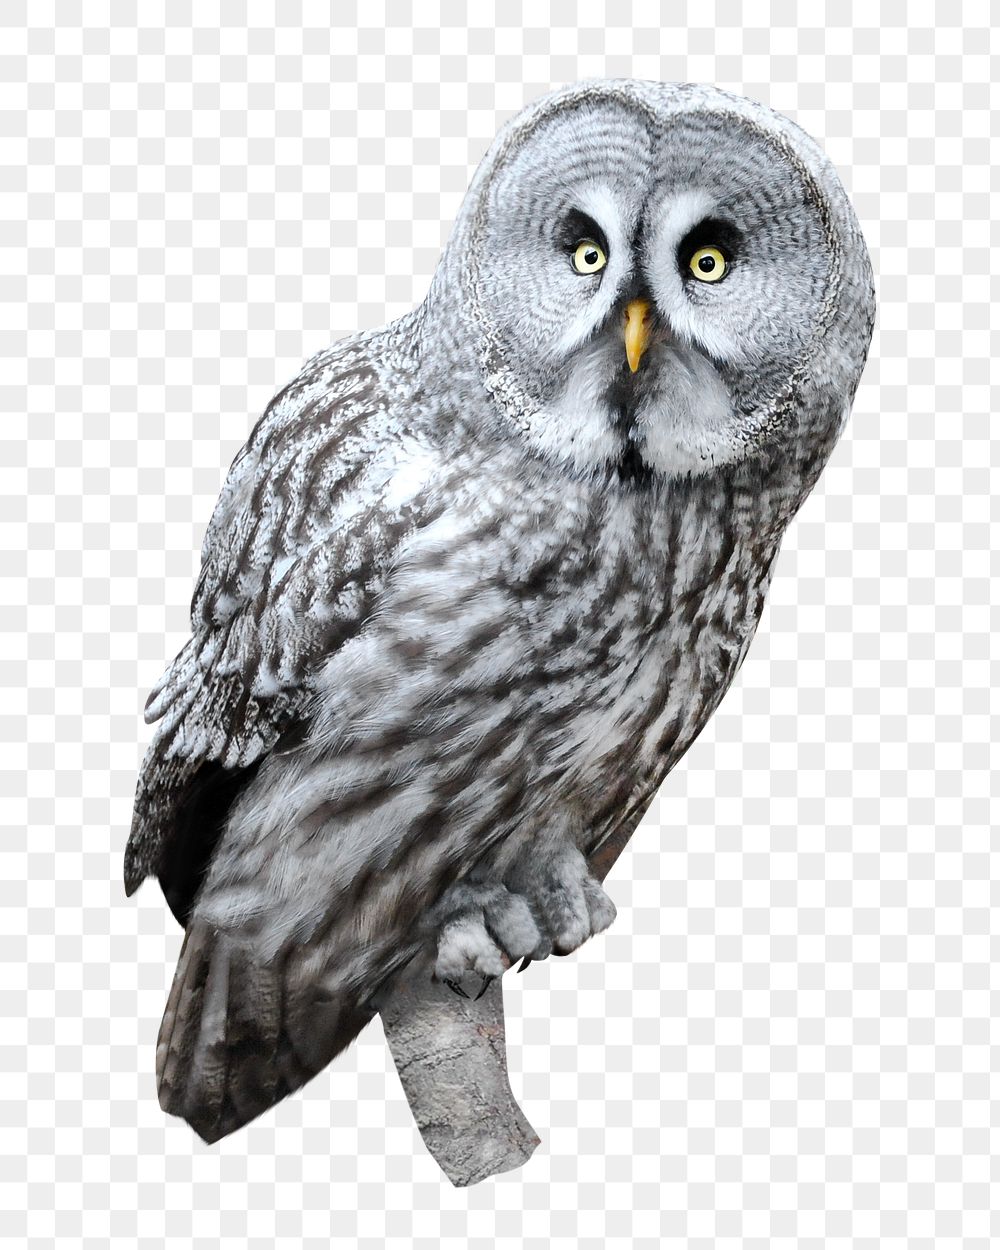 Grey owl png, transparent background